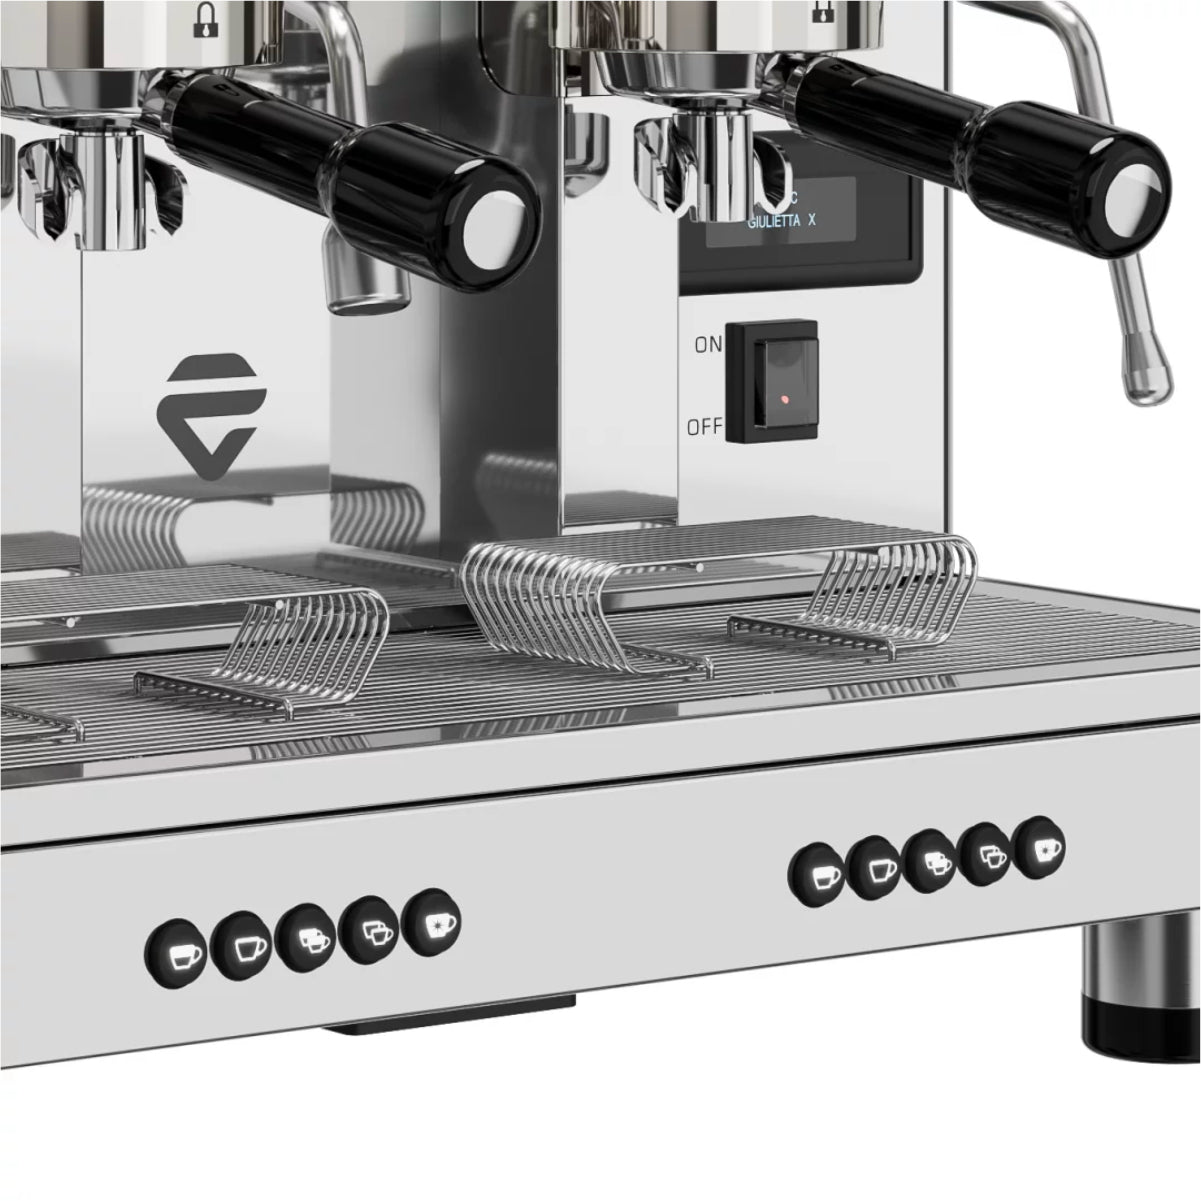 Lelit Bianca PID V3 E61 Professional Semi-Automatic Espresso Machine (White Open Box) - PL162TCW